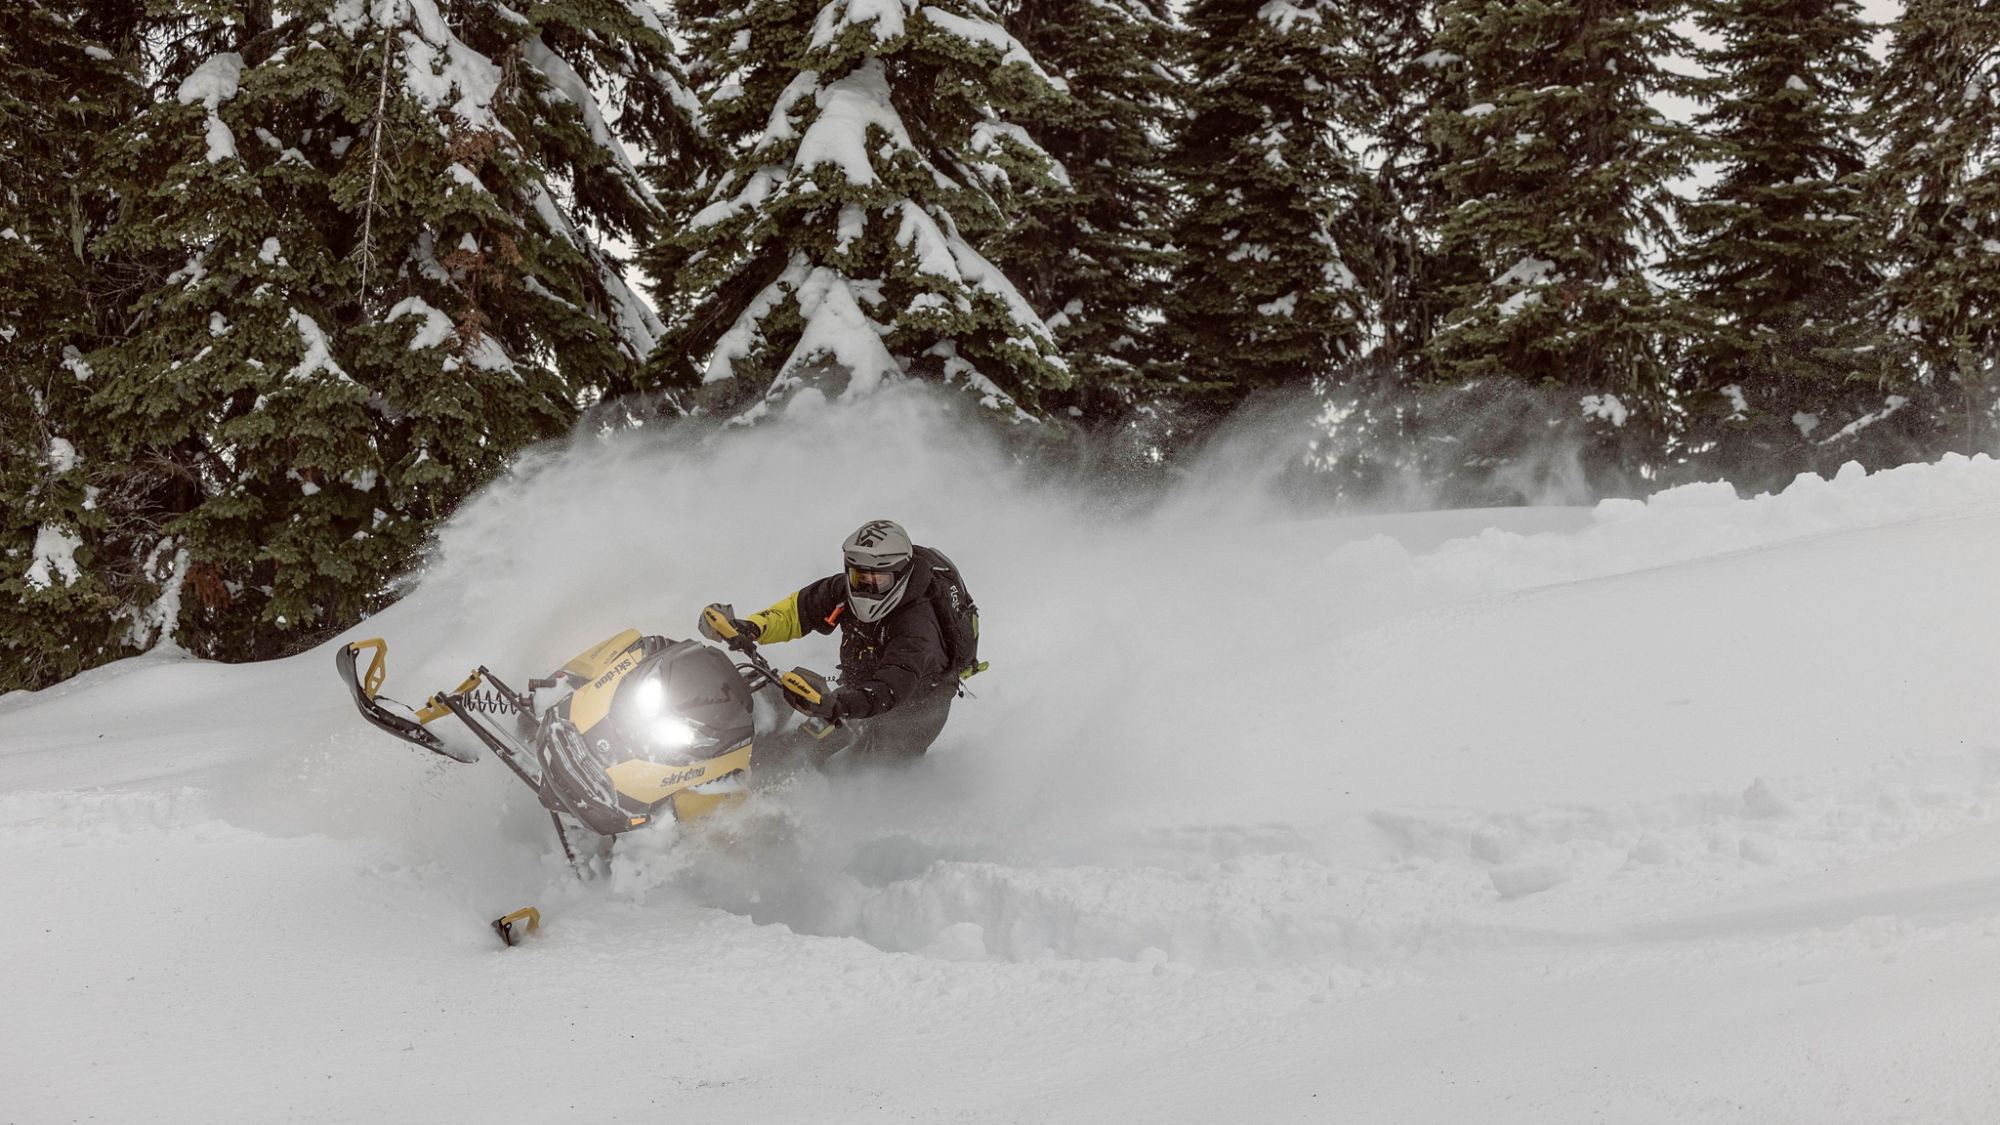 2025 Ski-Doo Backcountry riding in deep snow